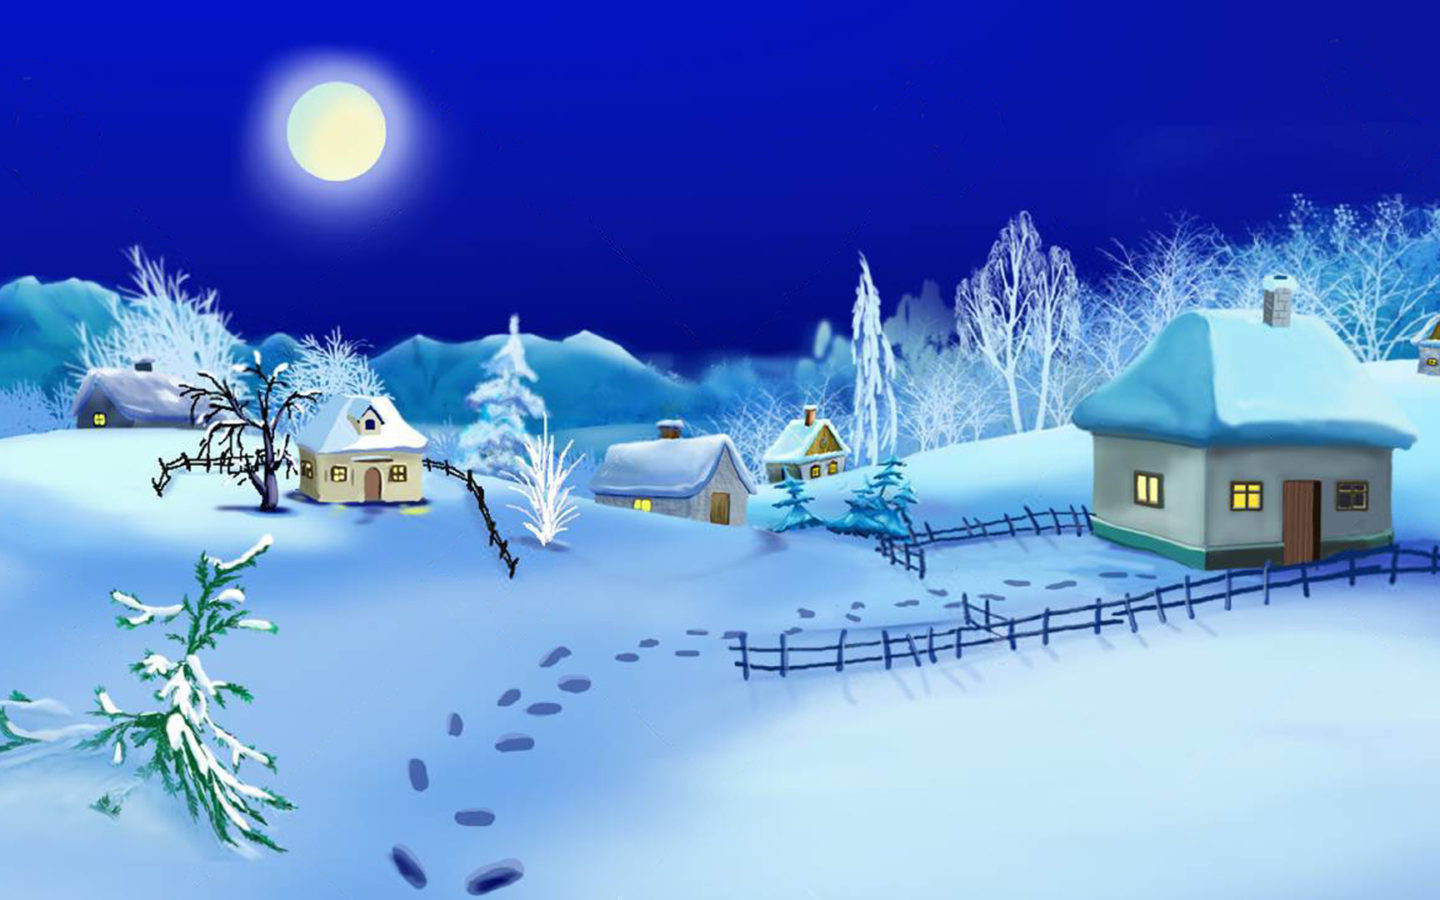 Christmas Night Small Village In A Winter Time HD Wallpaper, Wallpaper13.com